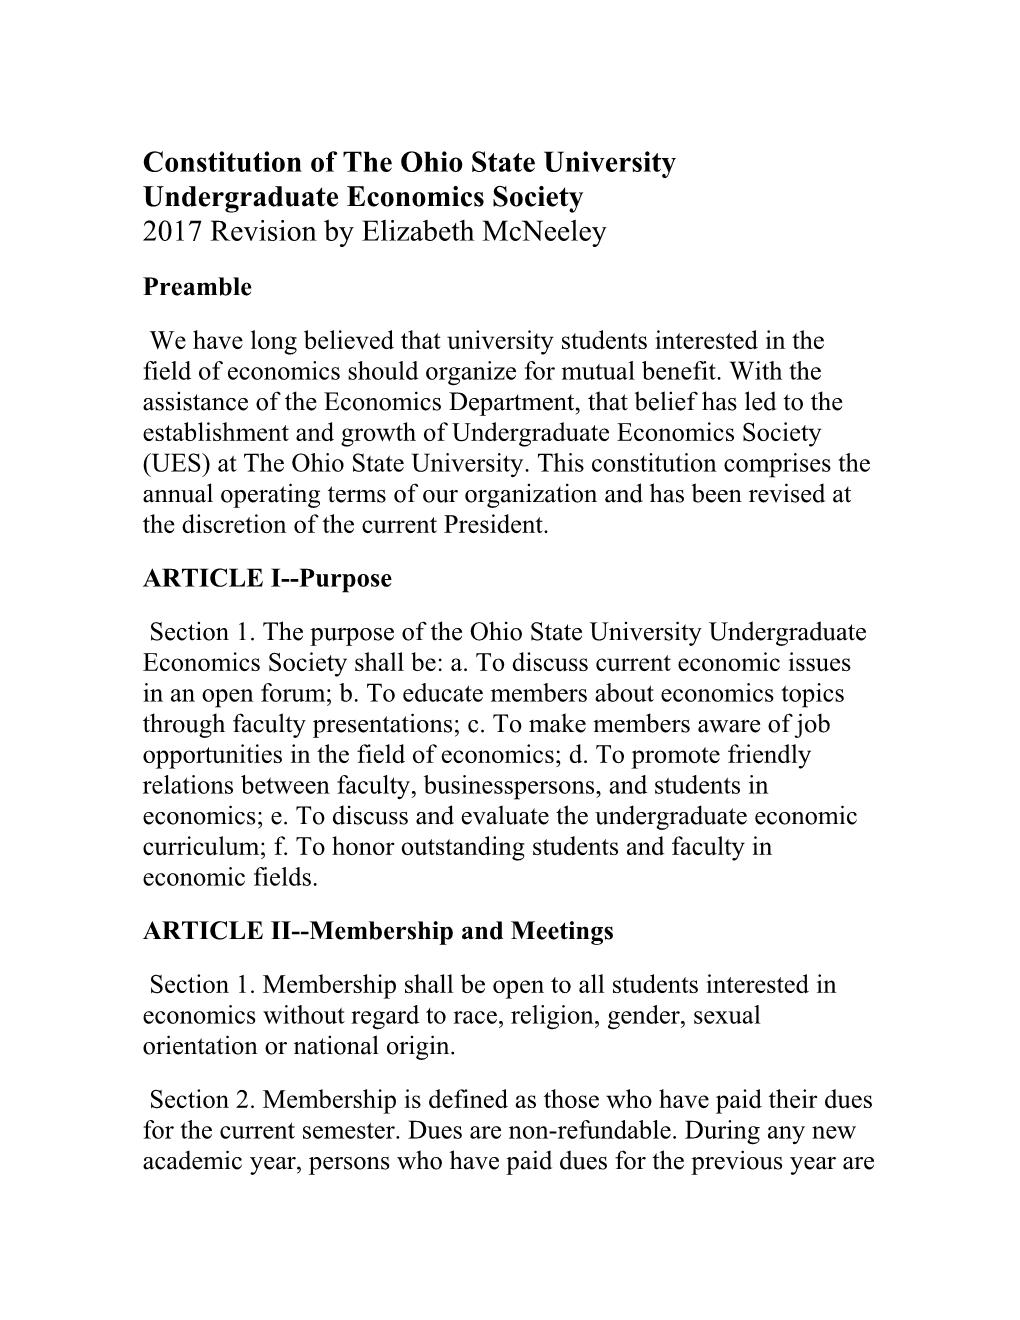 Constitution of the Ohio State University Undergraduate Economics Society